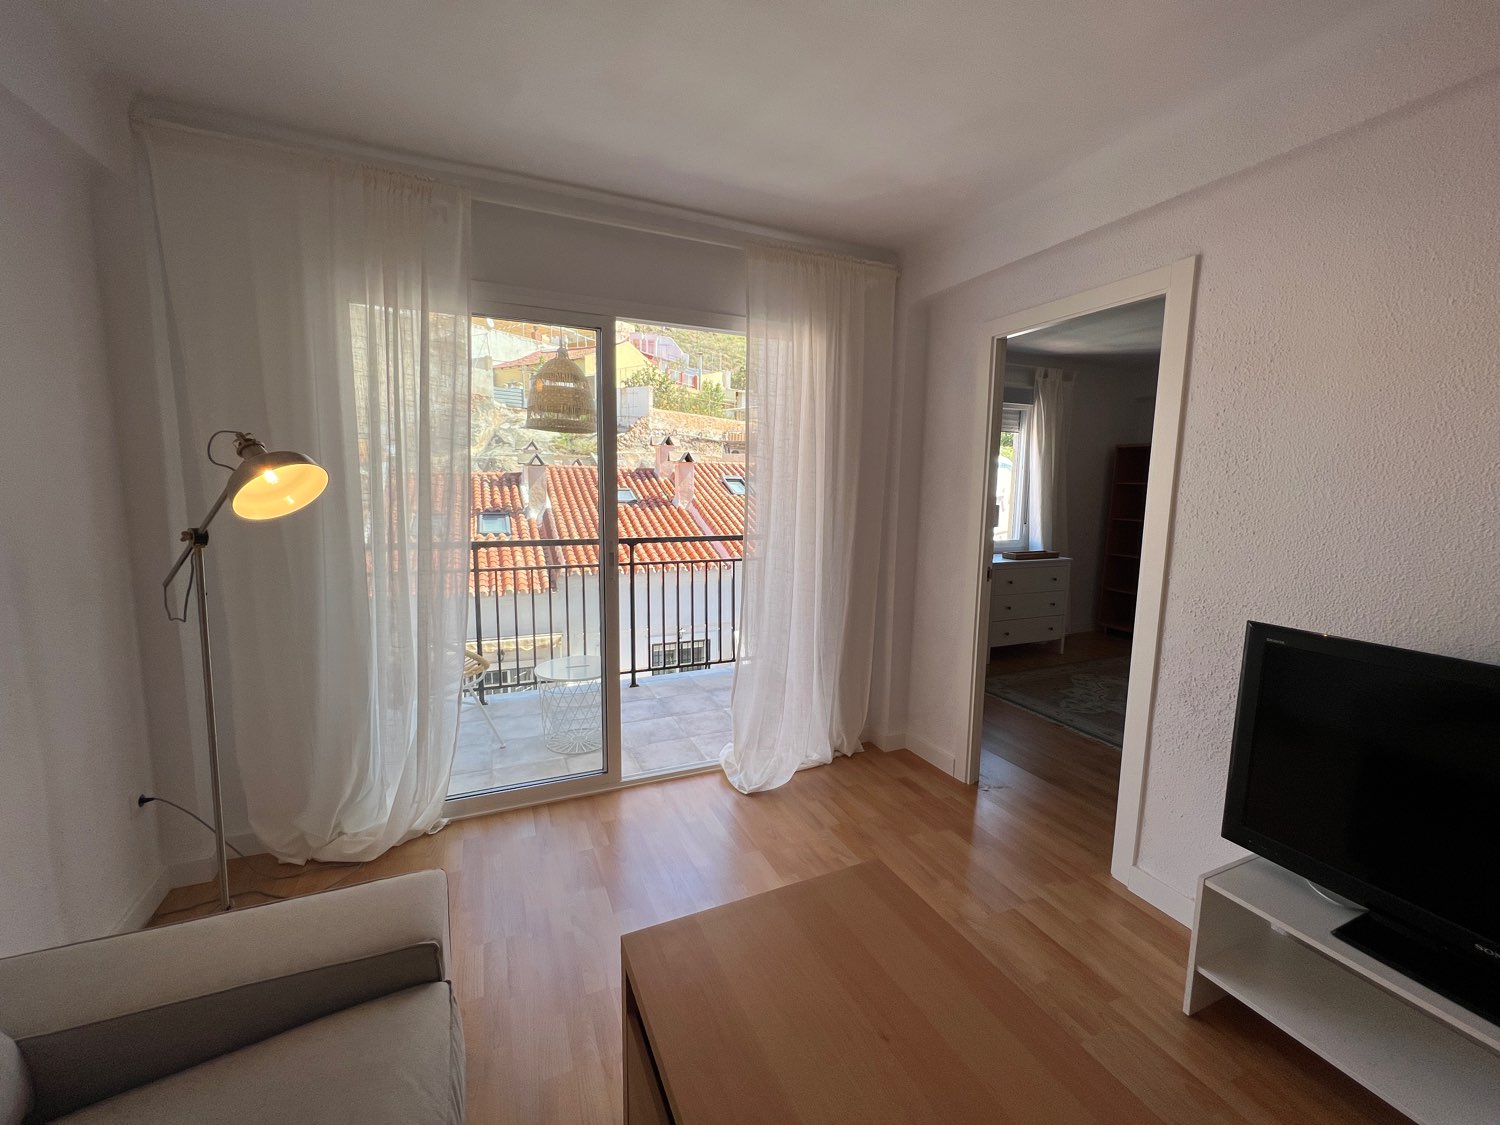 Flat for rent in Málaga